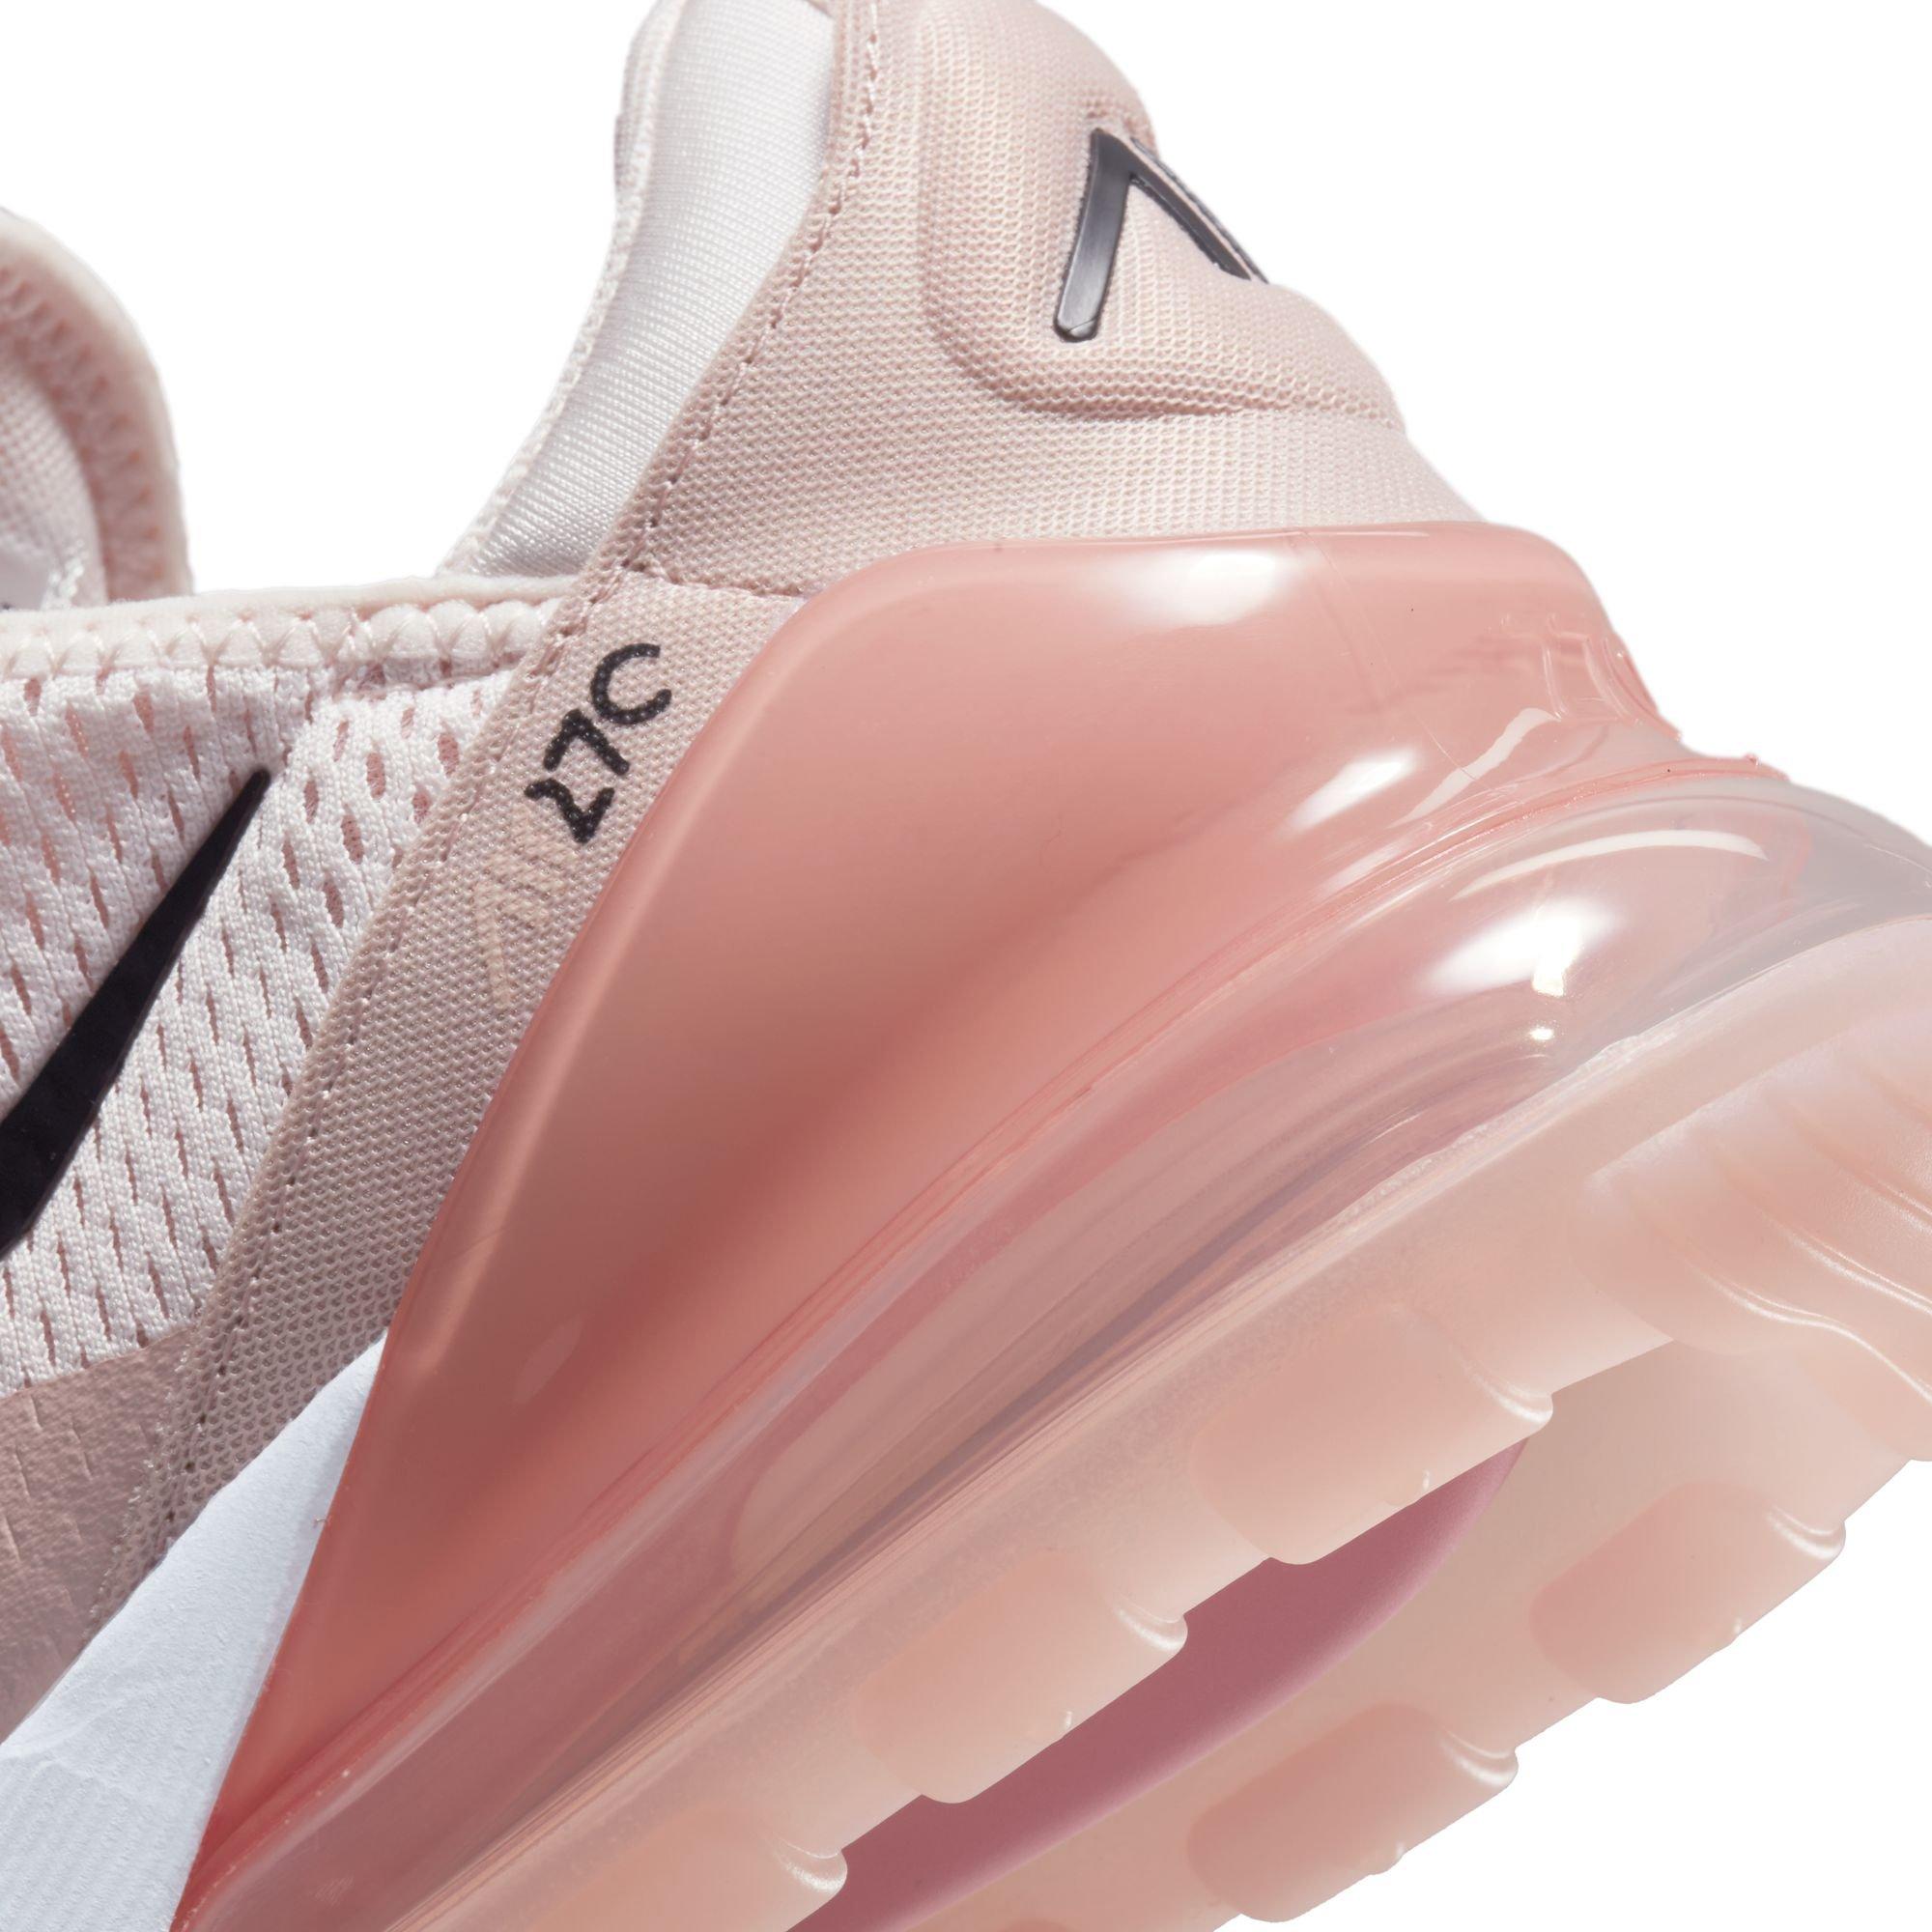 También carro Exclusivo Nike Air Max 270 "Light Soft Pink/Black/Pink Oxford" Women's Shoe